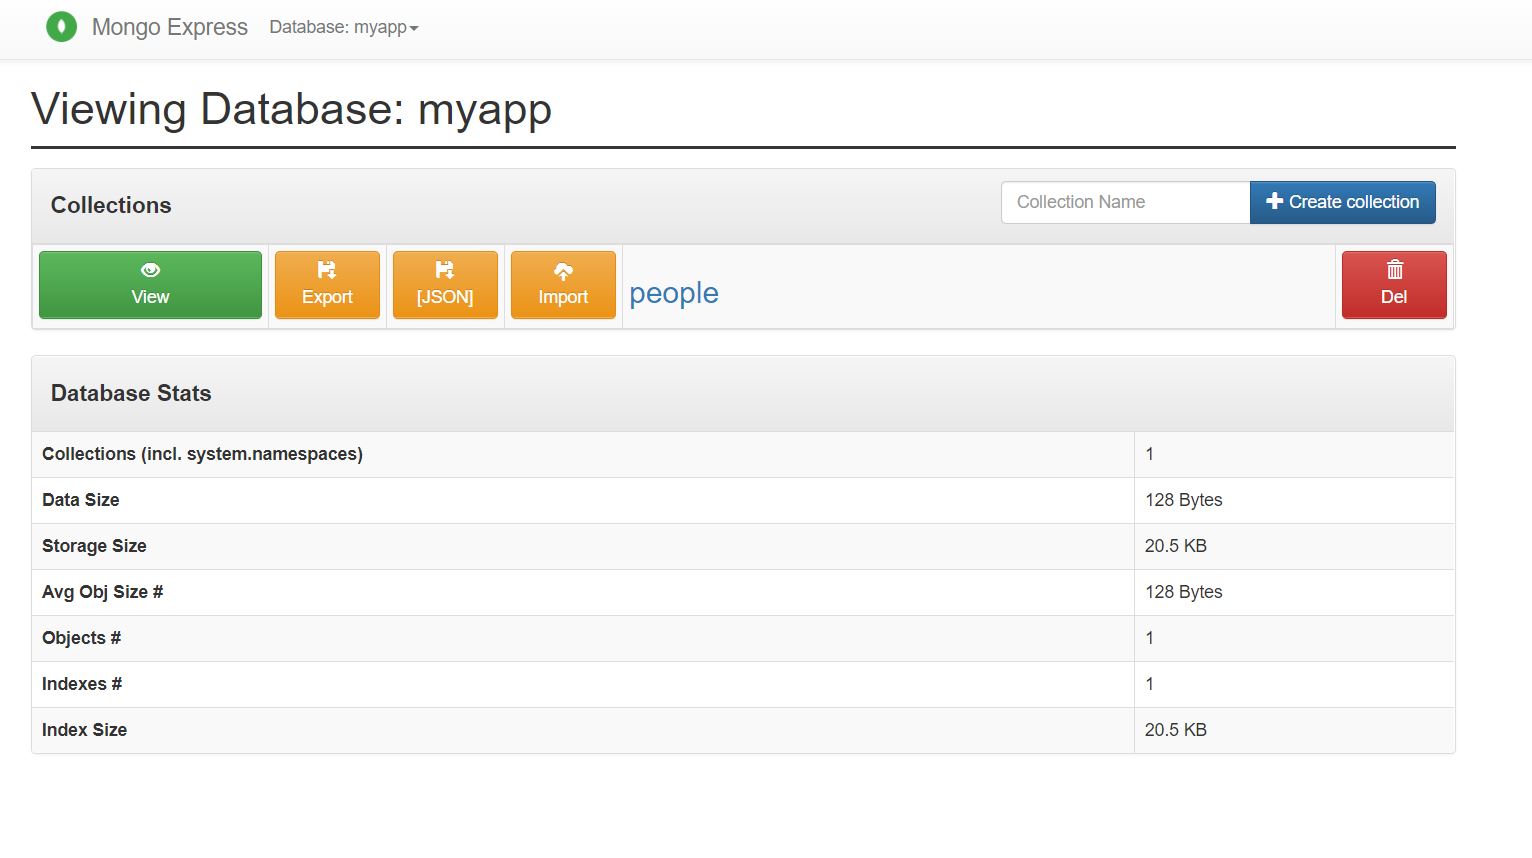 Screenshot showing Mongo Express view of myapp database